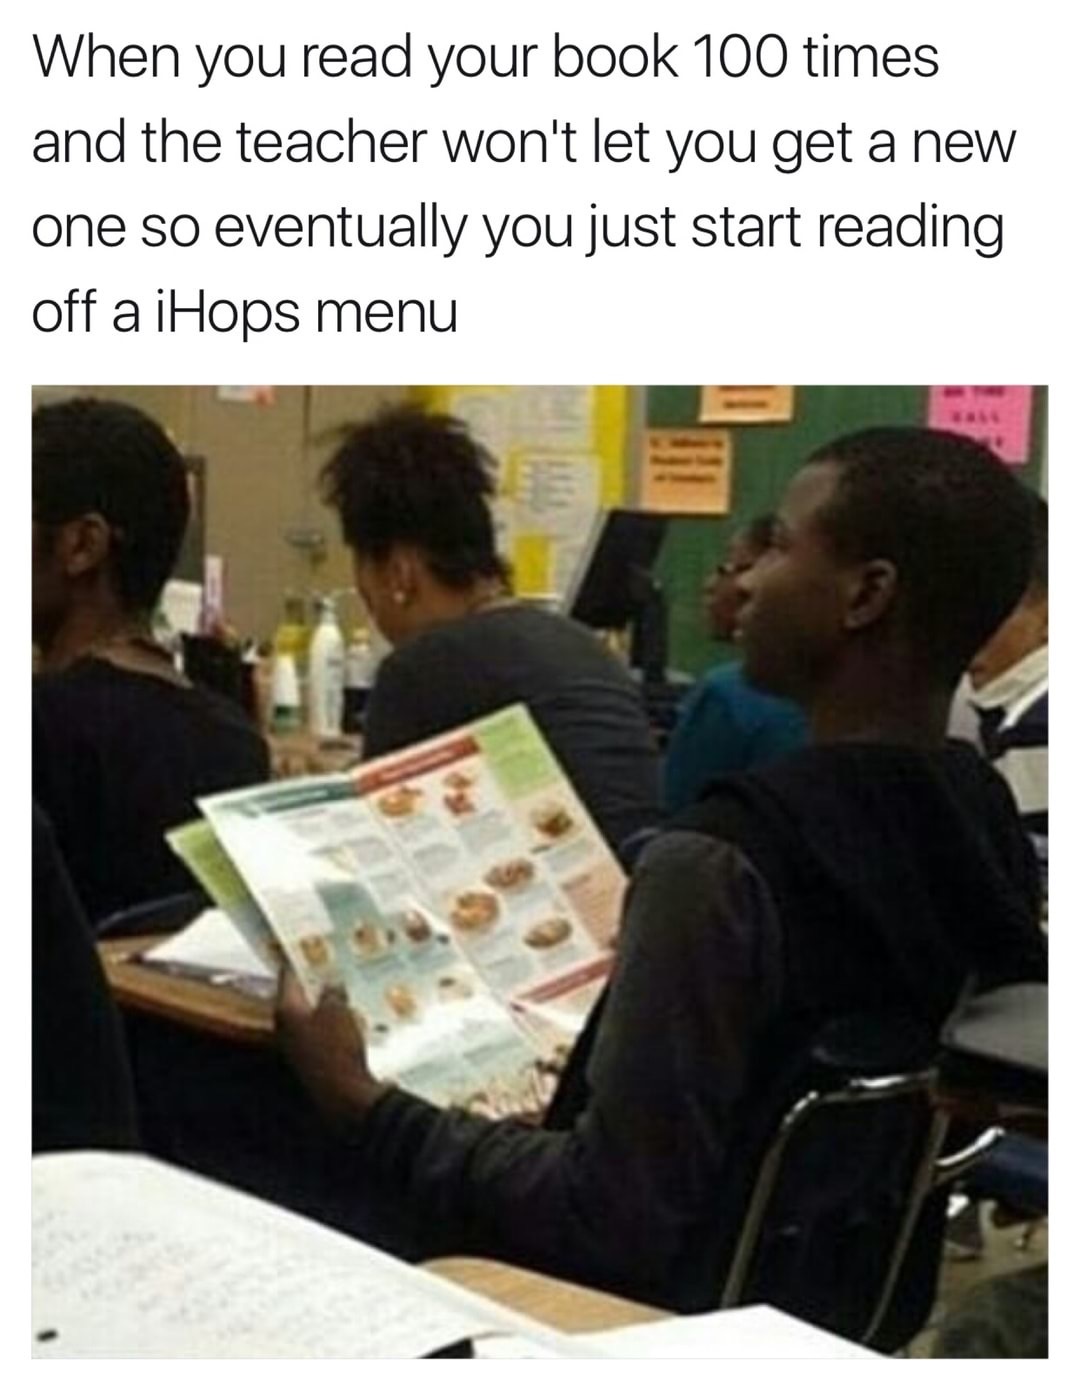 Meme of dude reading an iHop menu in class